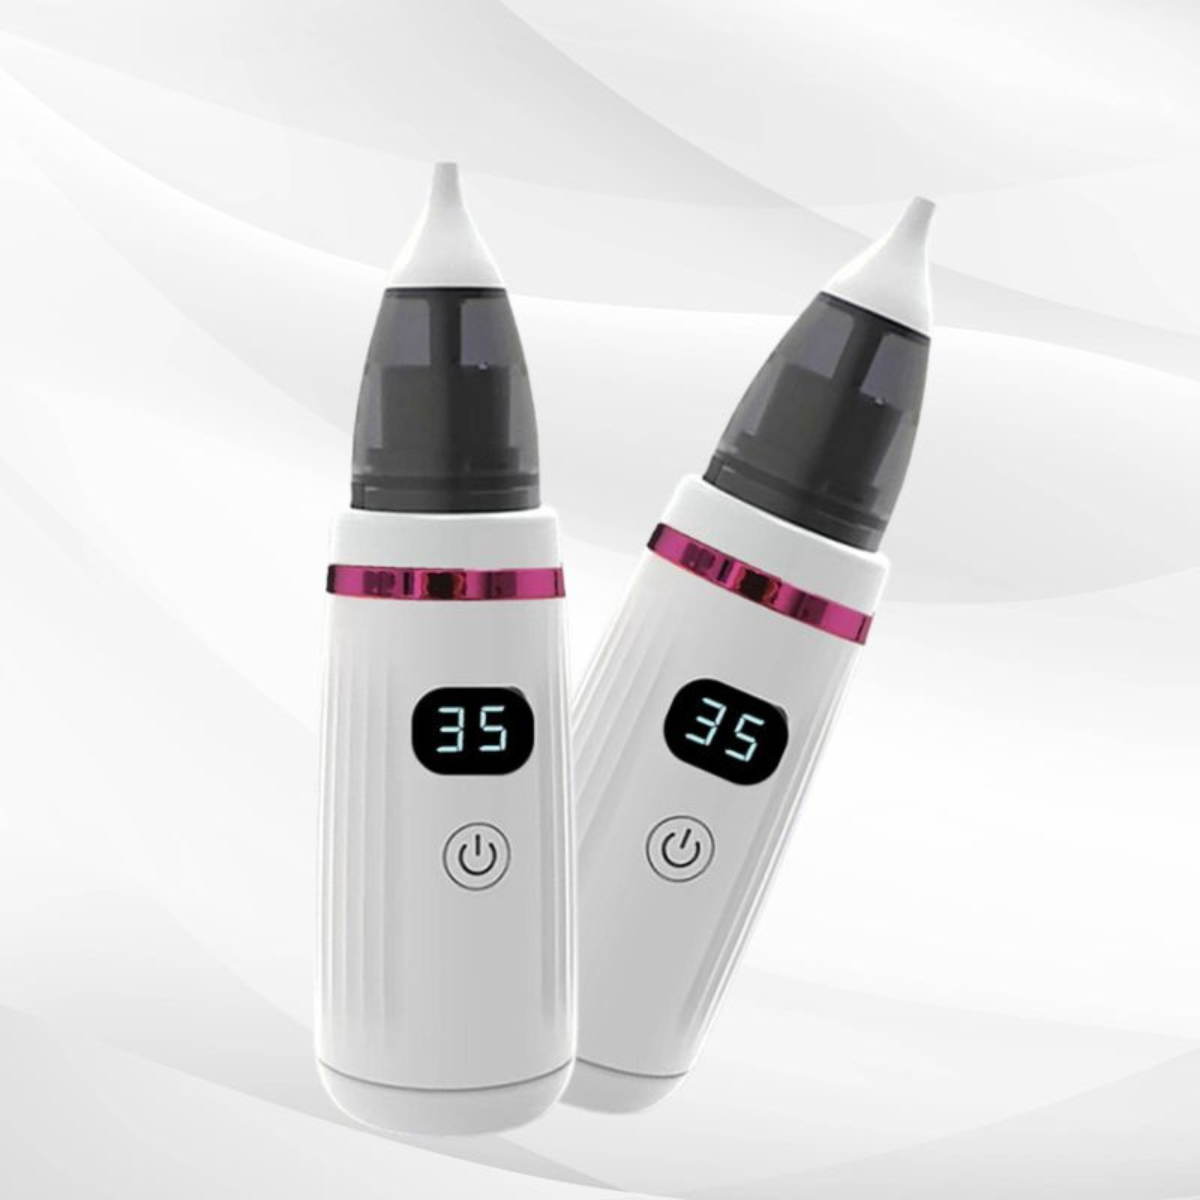 Higienizador Aspirador Nasal Elétrico USB - 2